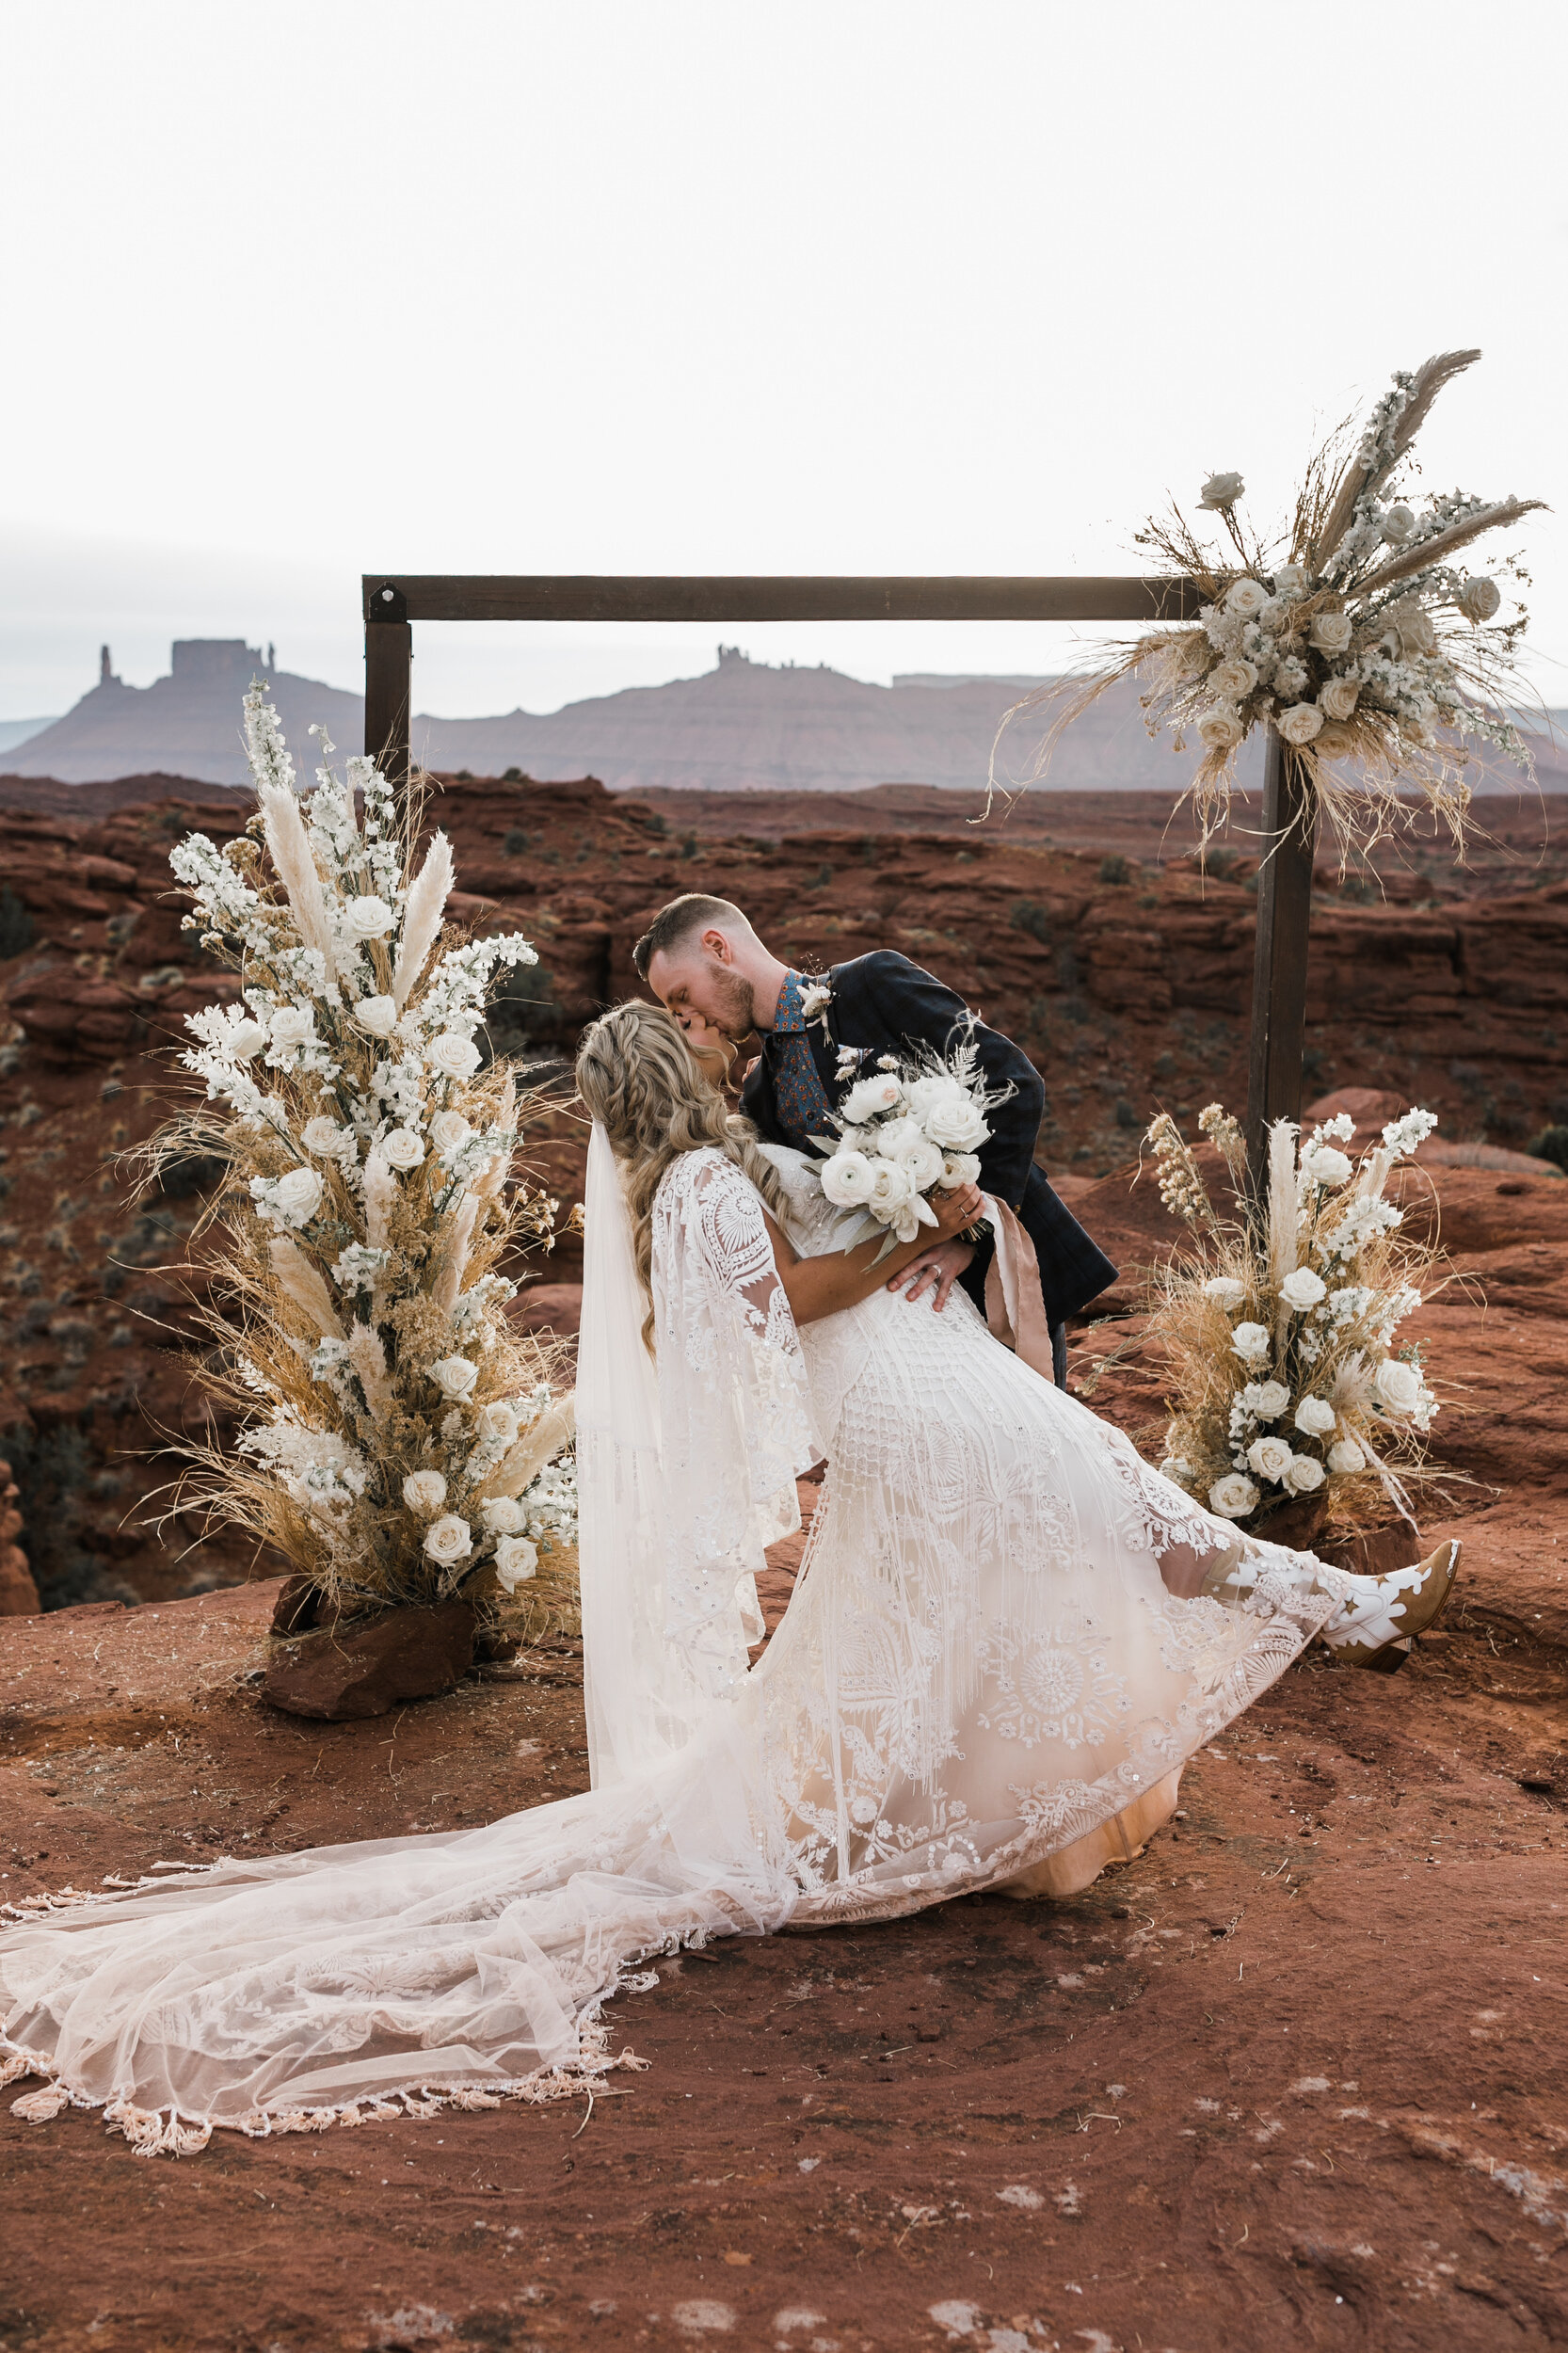 Rue de Siene Bride in Cowboy Boots in Moab, Utah | The Hearnes Adventure Wedding Photography